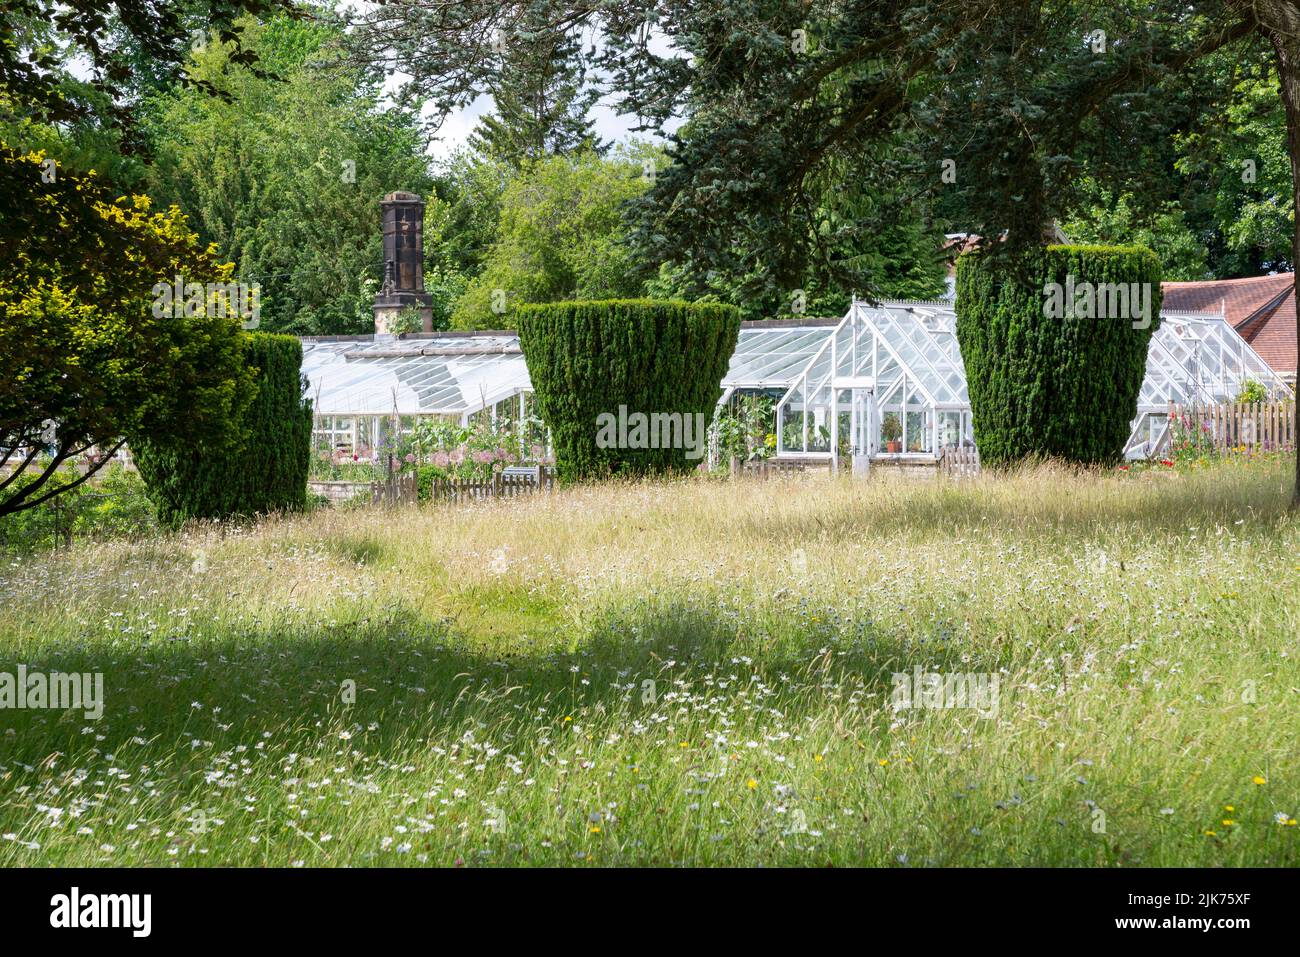 Wildlfower area and glasshouses at Thornbridge Hall gardens near Bakewell, Derbyshire, England. Stock Photo